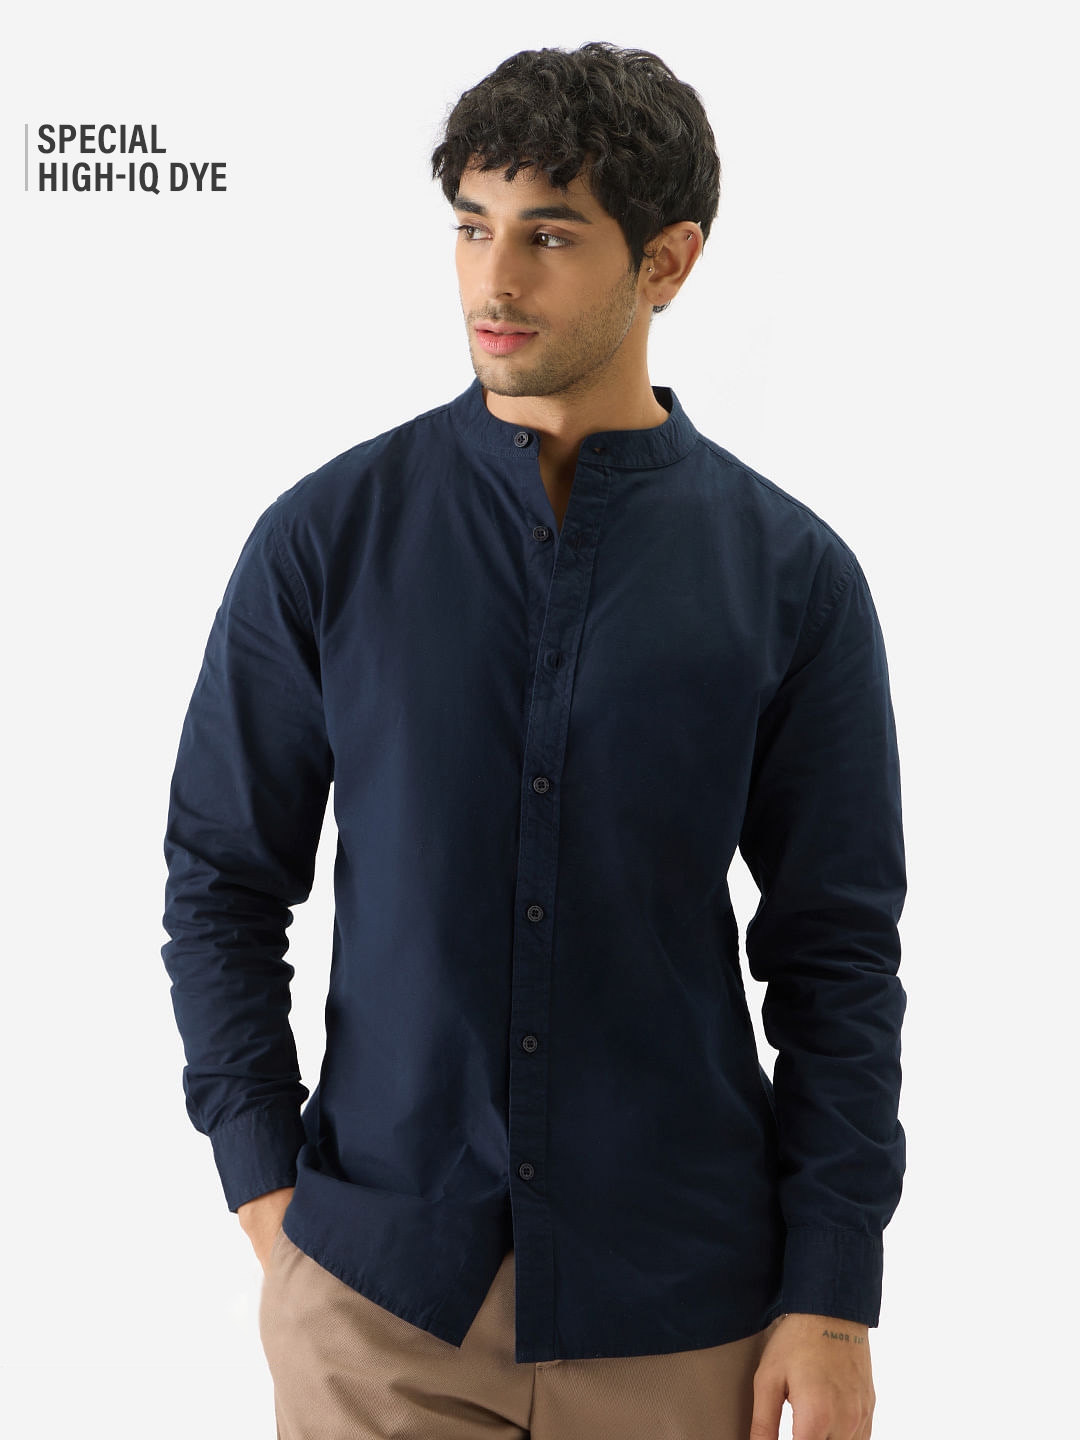 Men's Solids: Navy Blue Mandarin Shirts